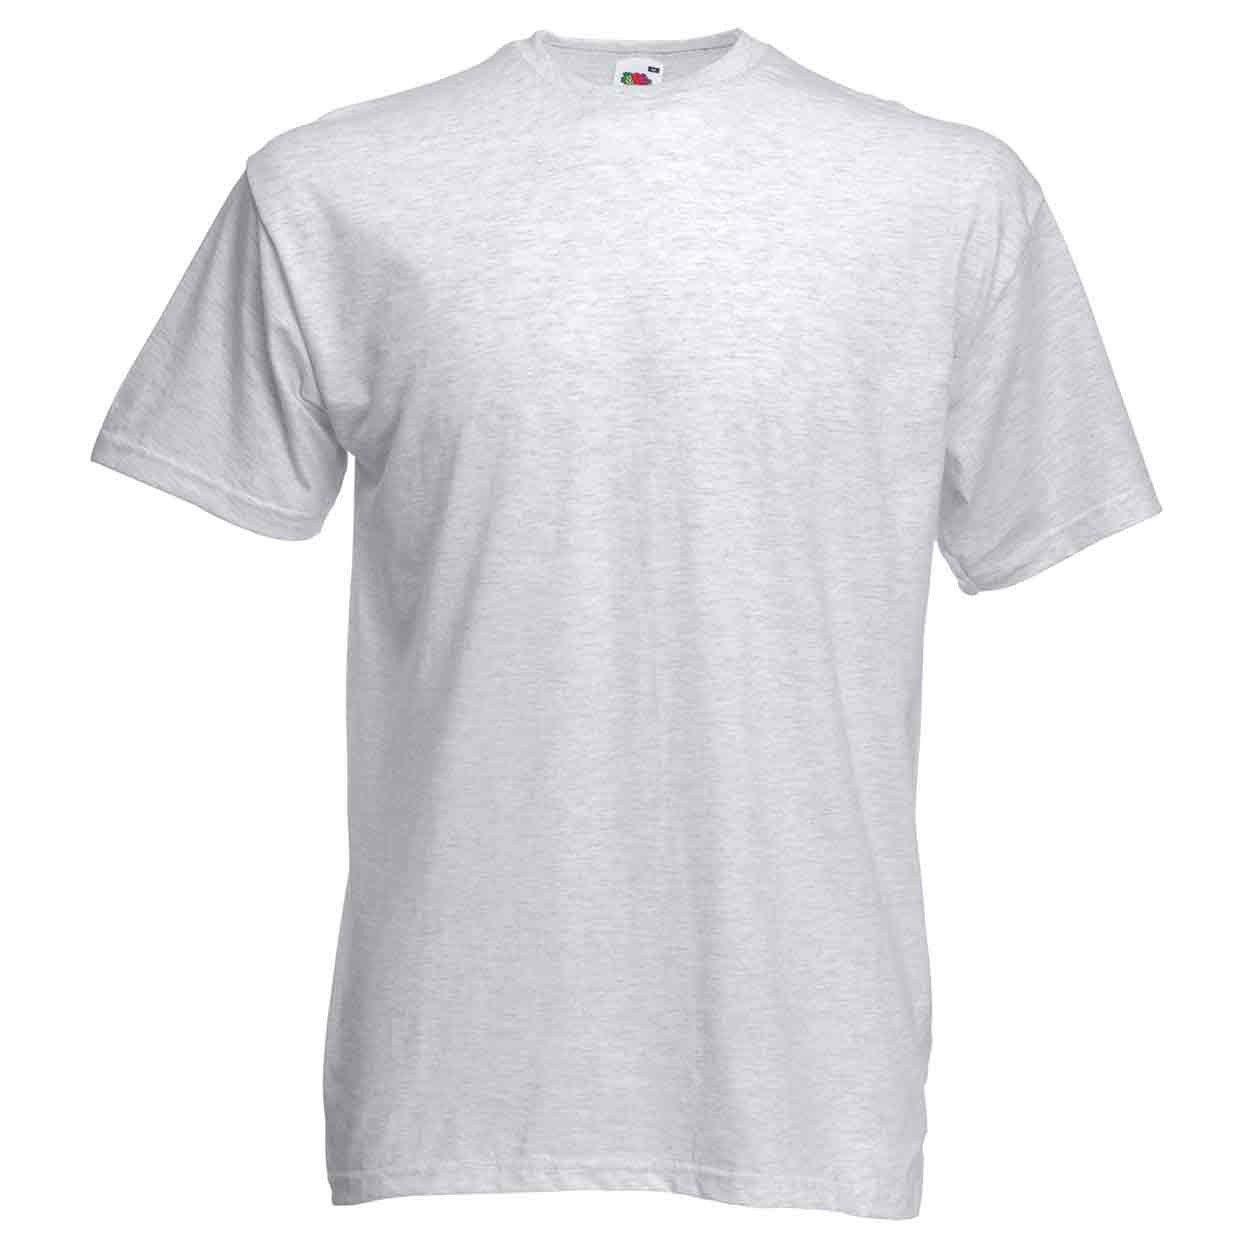 Fruit of the Loom SS6 Value T-Shirt - Lightweight T Shirts - Unisex / Men's T  Shirts - T Shirts - Leisurewear - Best Workwear